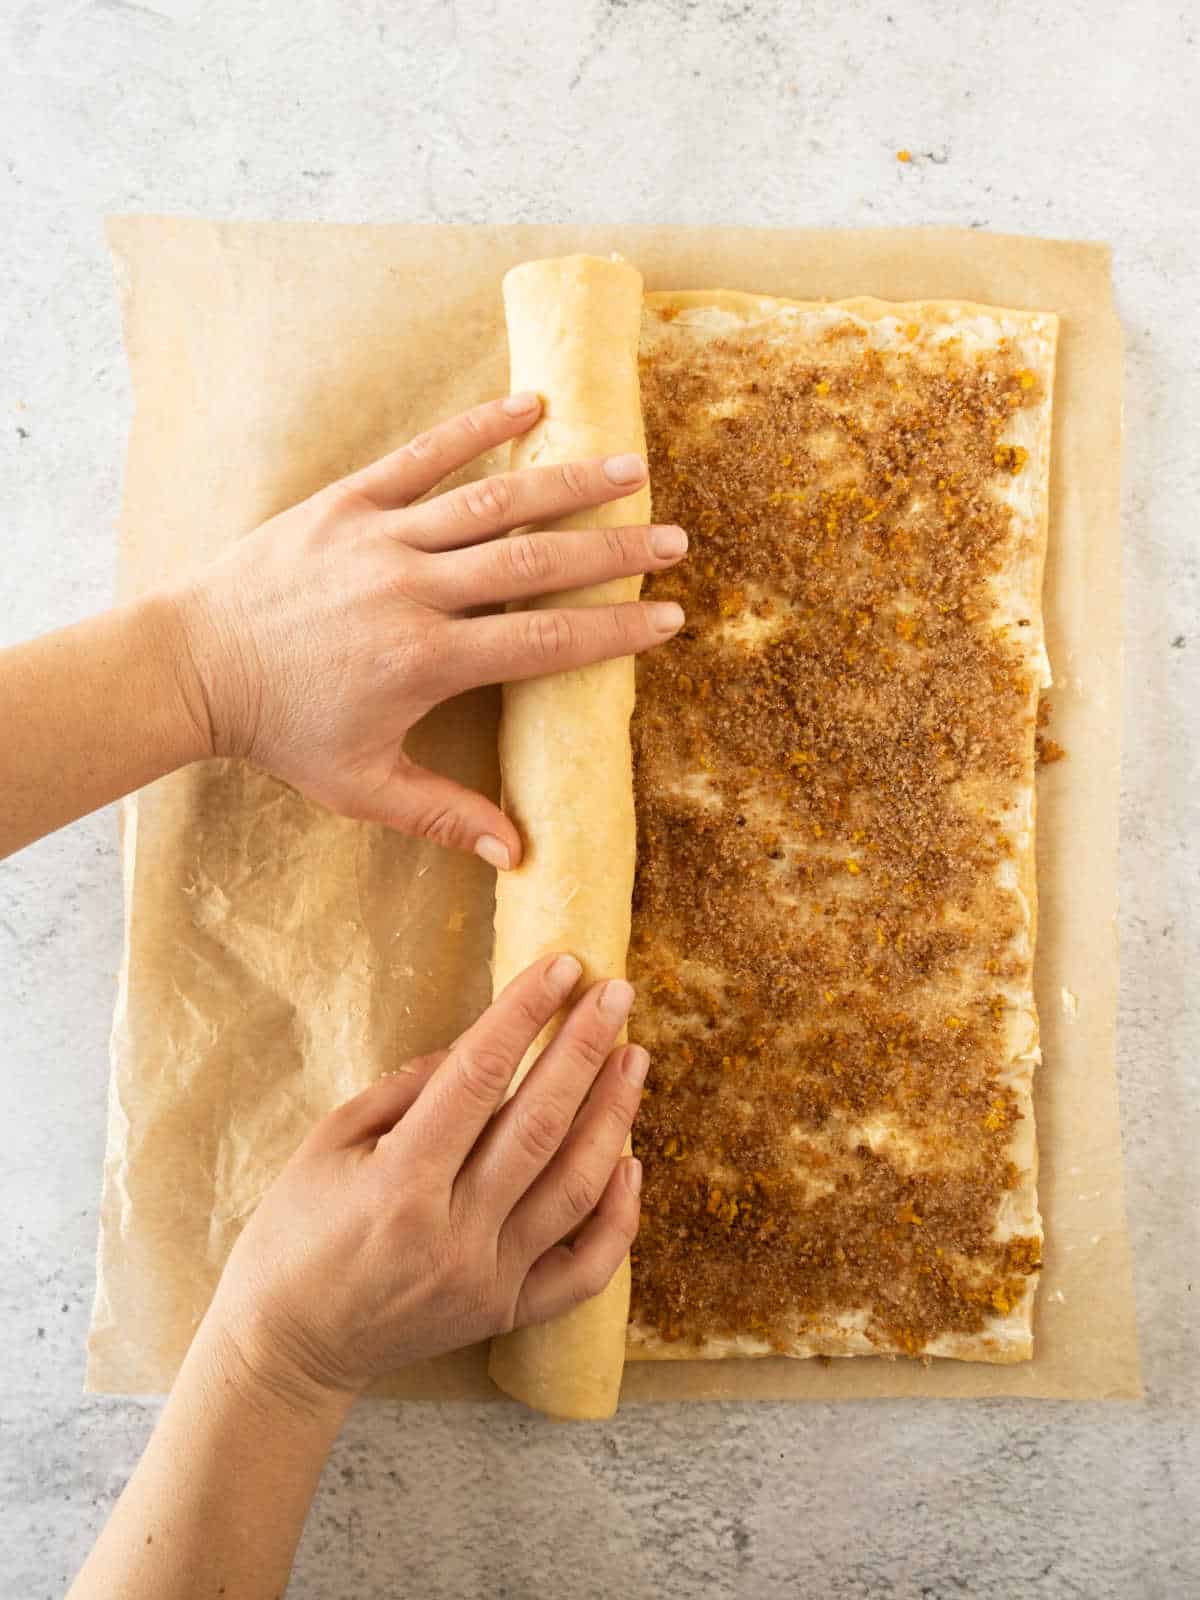 Rolling cinnamon orange rolls dough on parchment paper. Light gray surface.